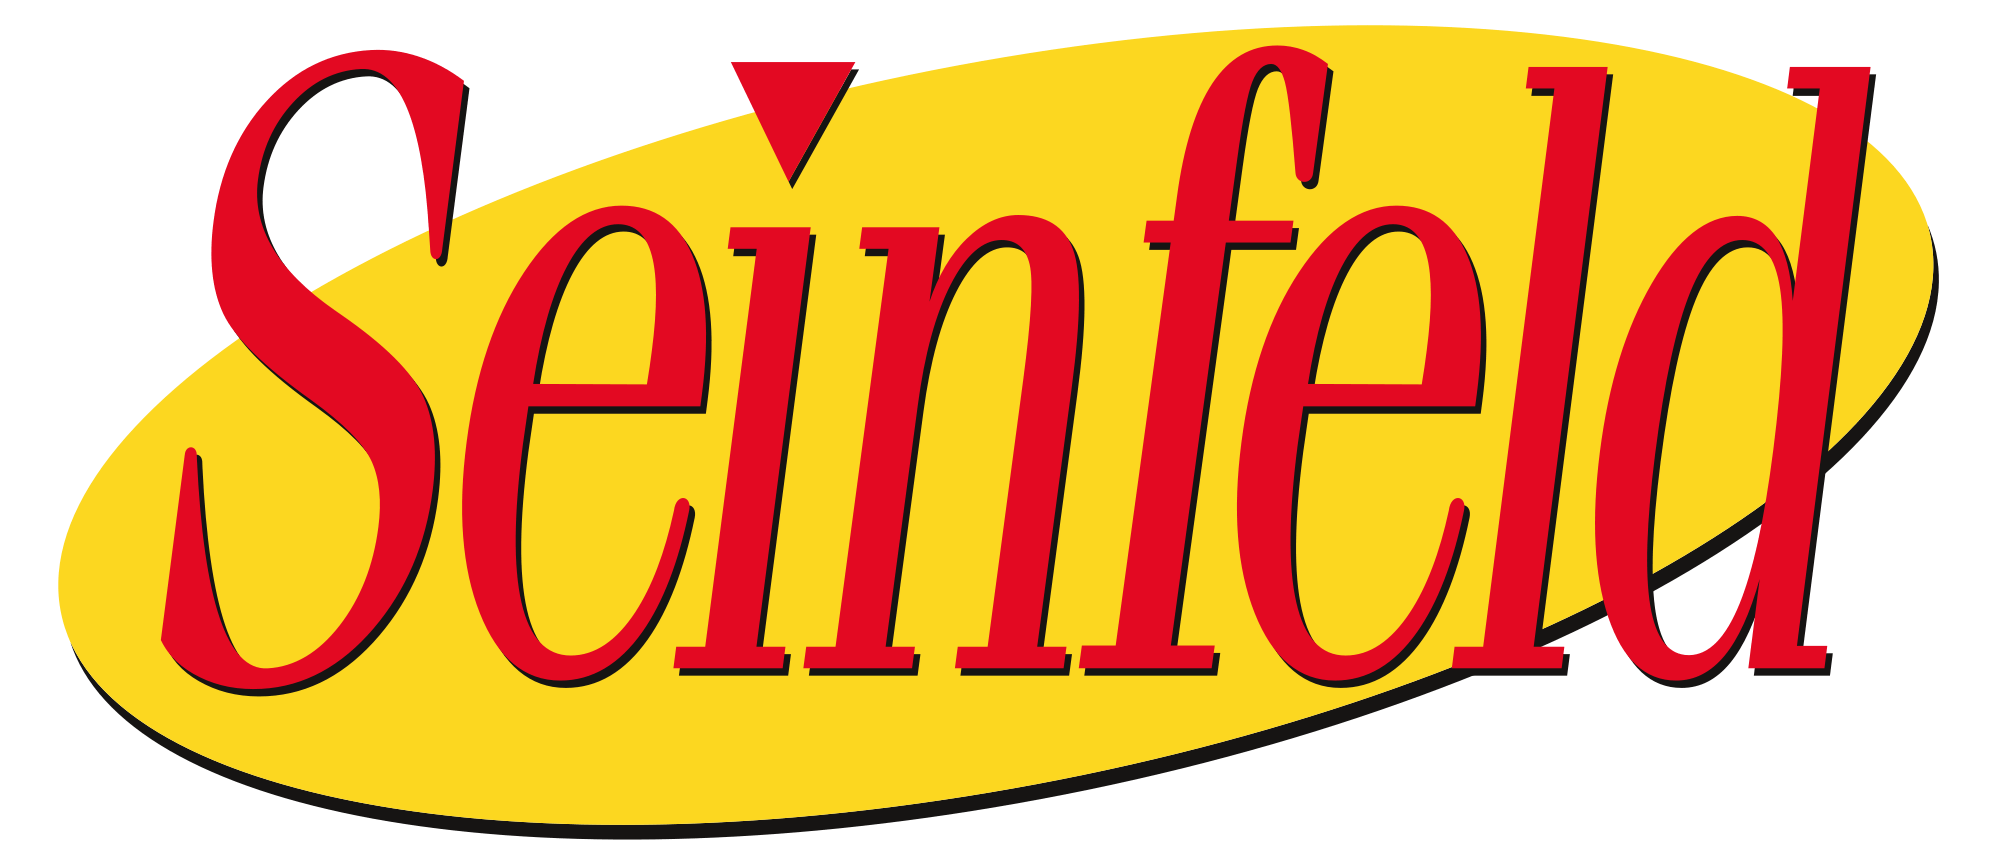 Seinfeld Logo - File:Seinfeld English logo.png - Wikimedia Commons